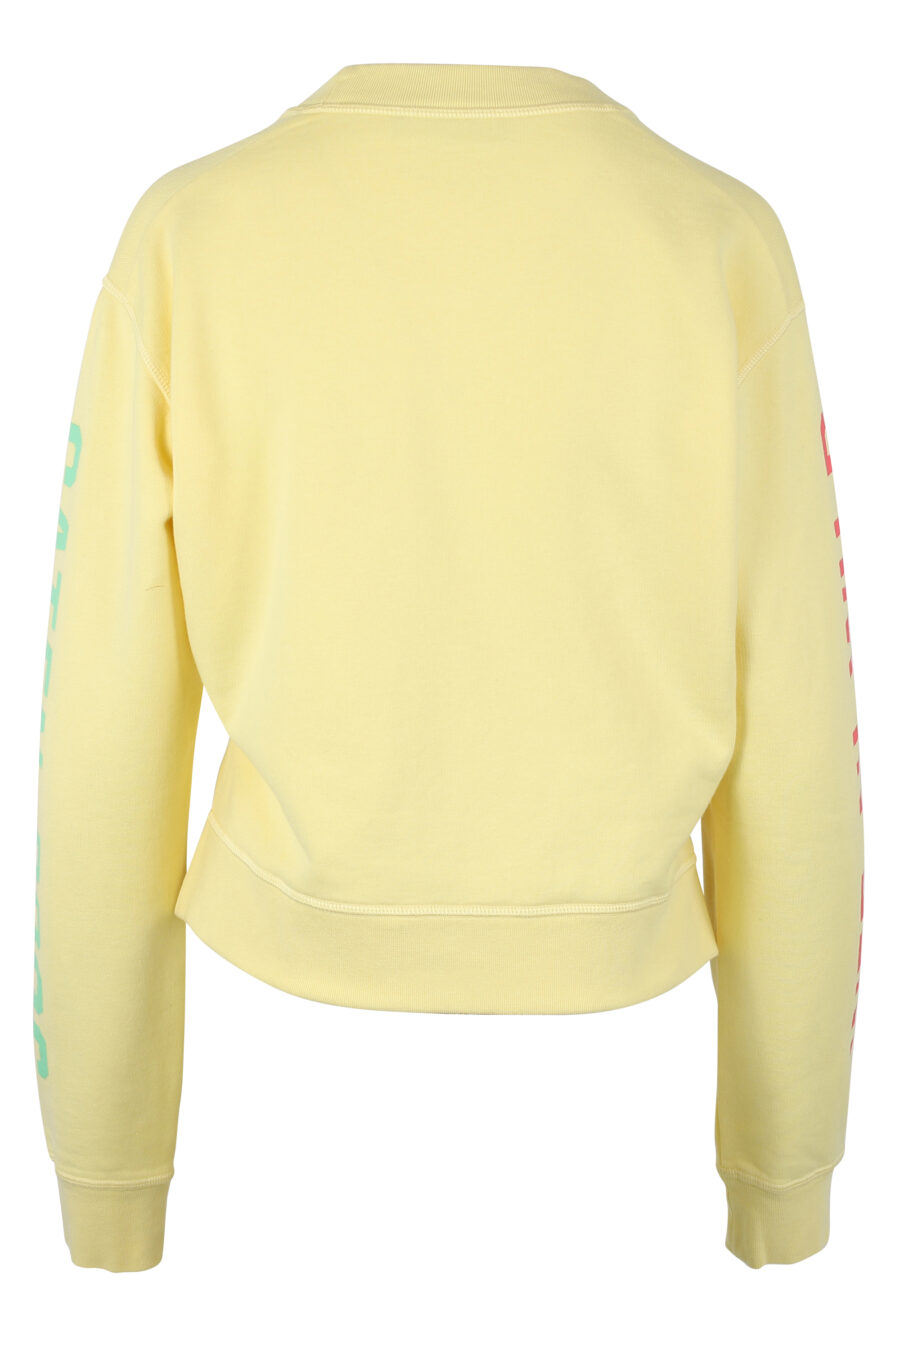 Yellow sweatshirt with green maxilogo and text on sleeves - IMG 9777